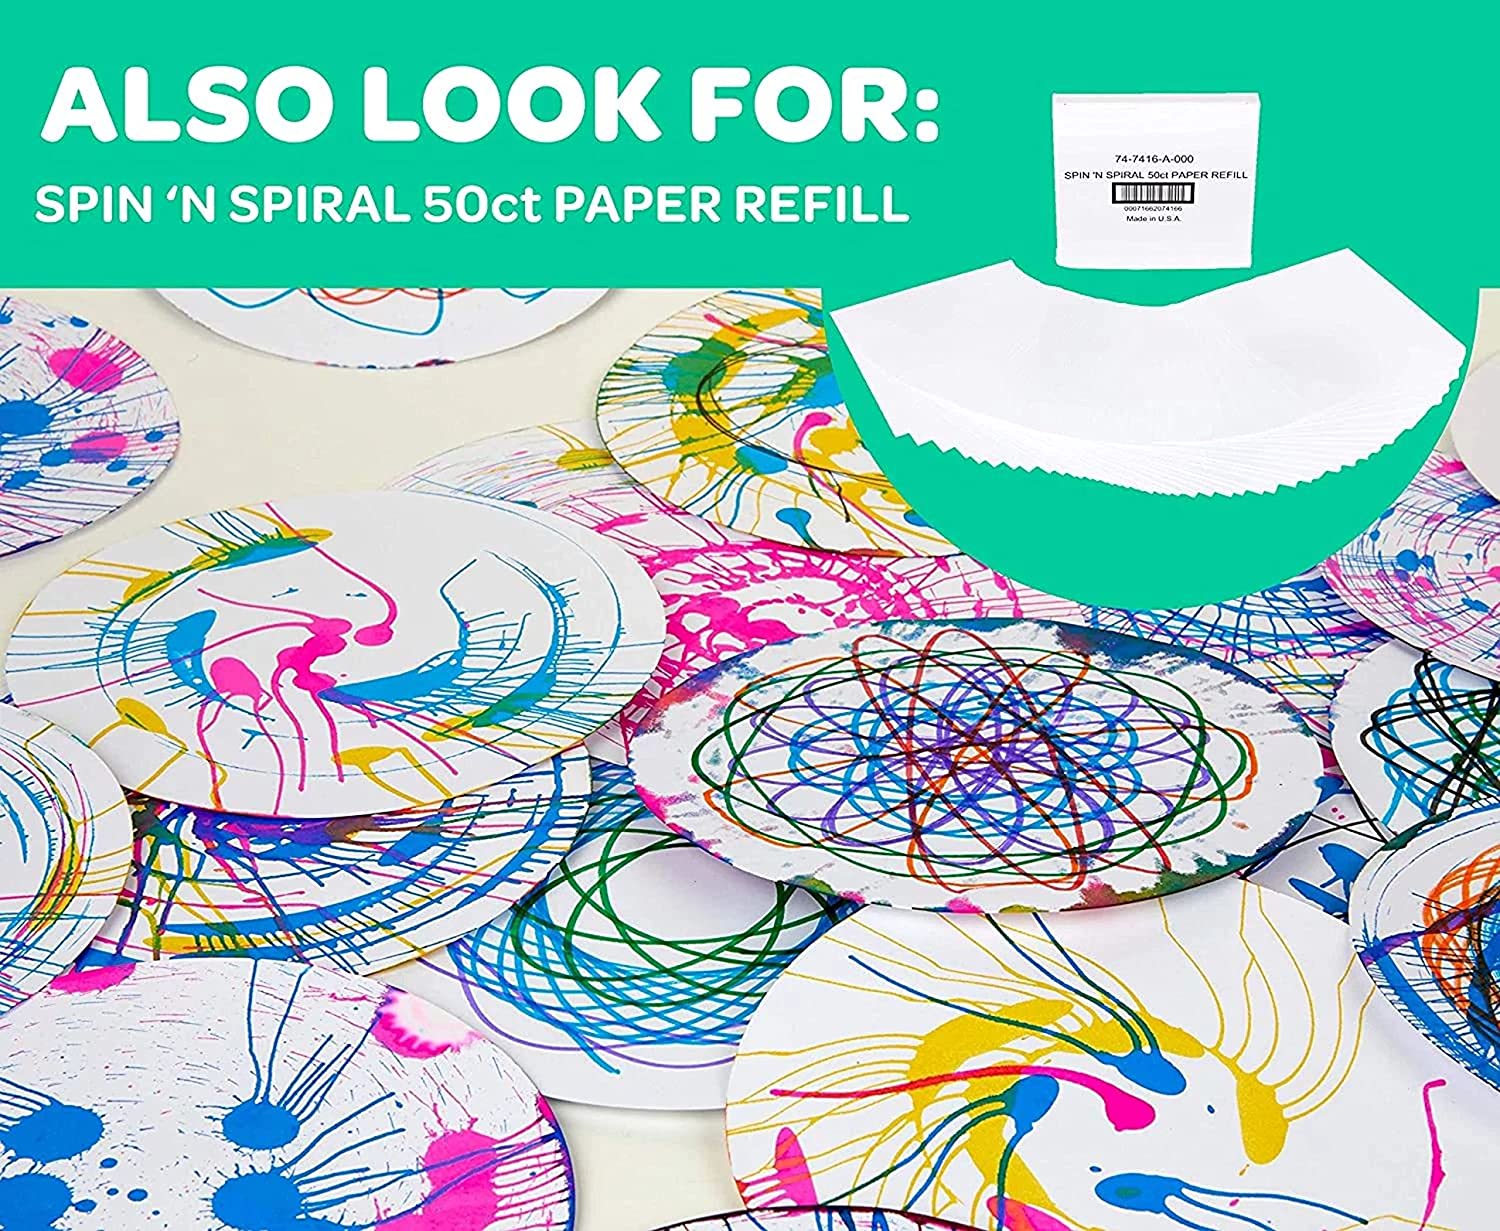 Spiral Art Activity, Make Cool Spiral Images